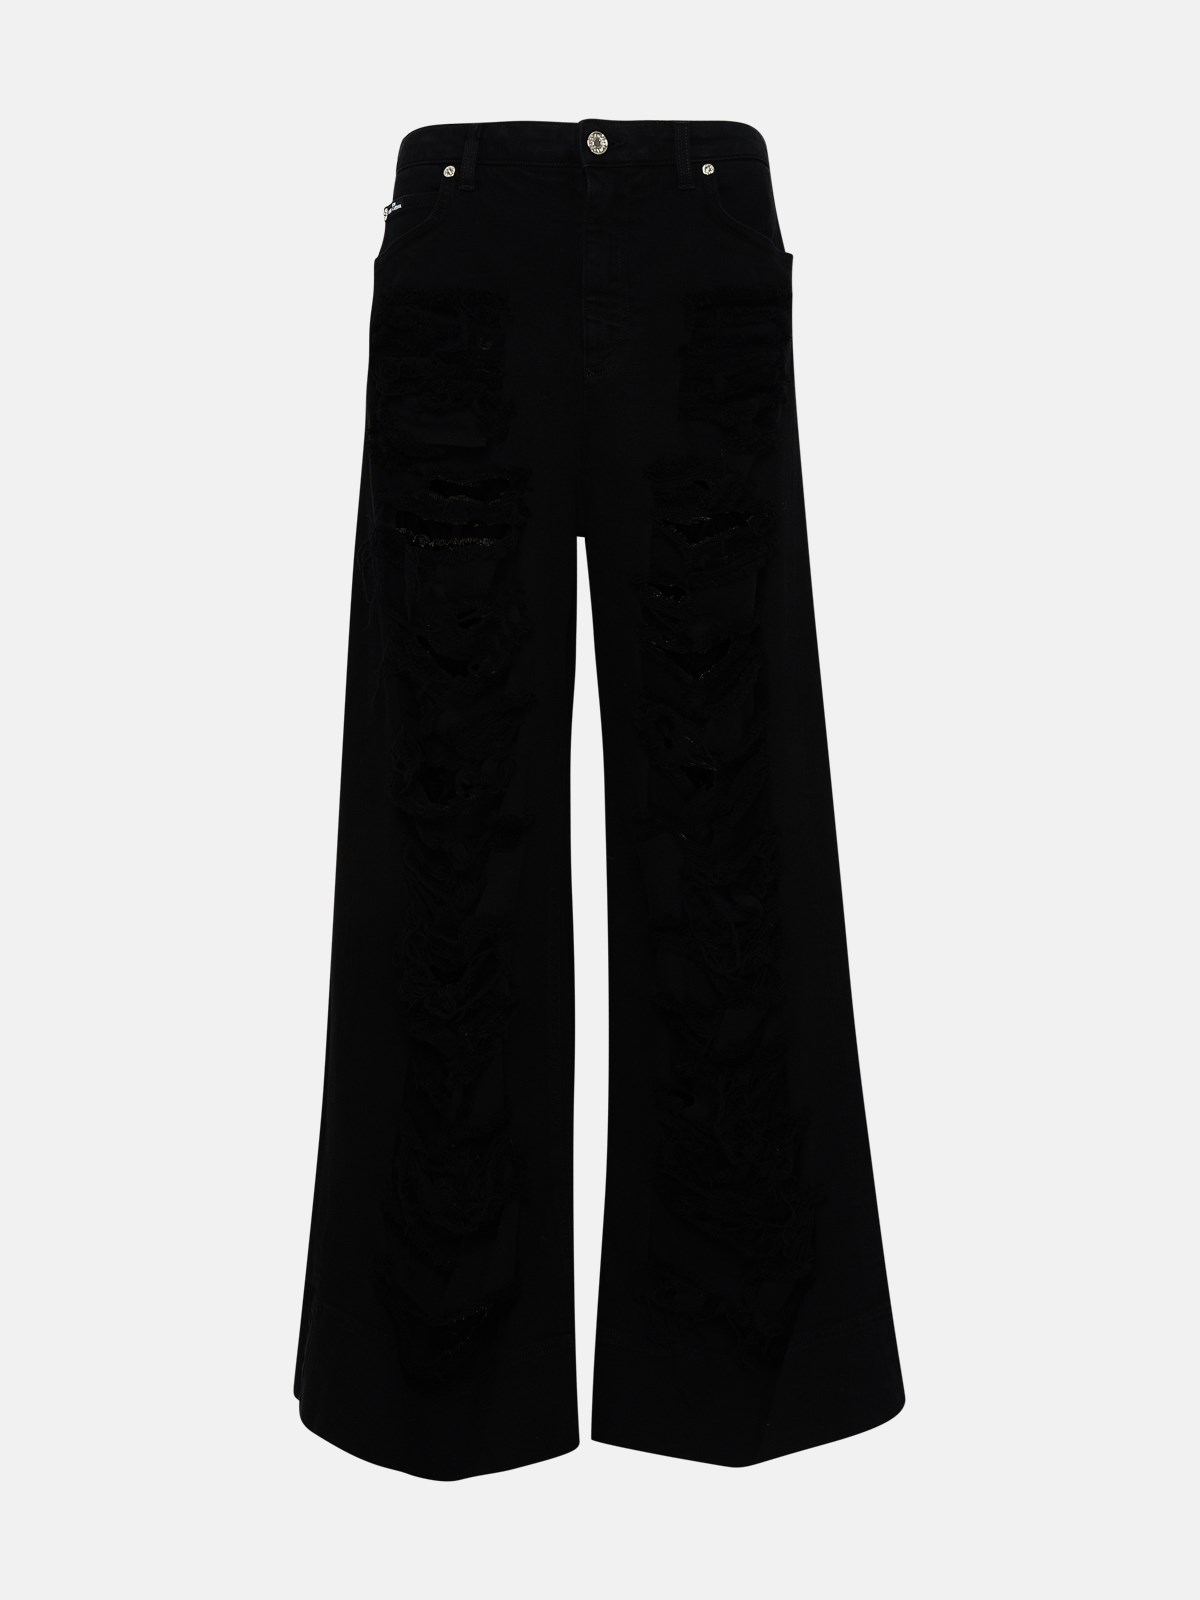 Dolce & Gabbana Black Cotton Jeans